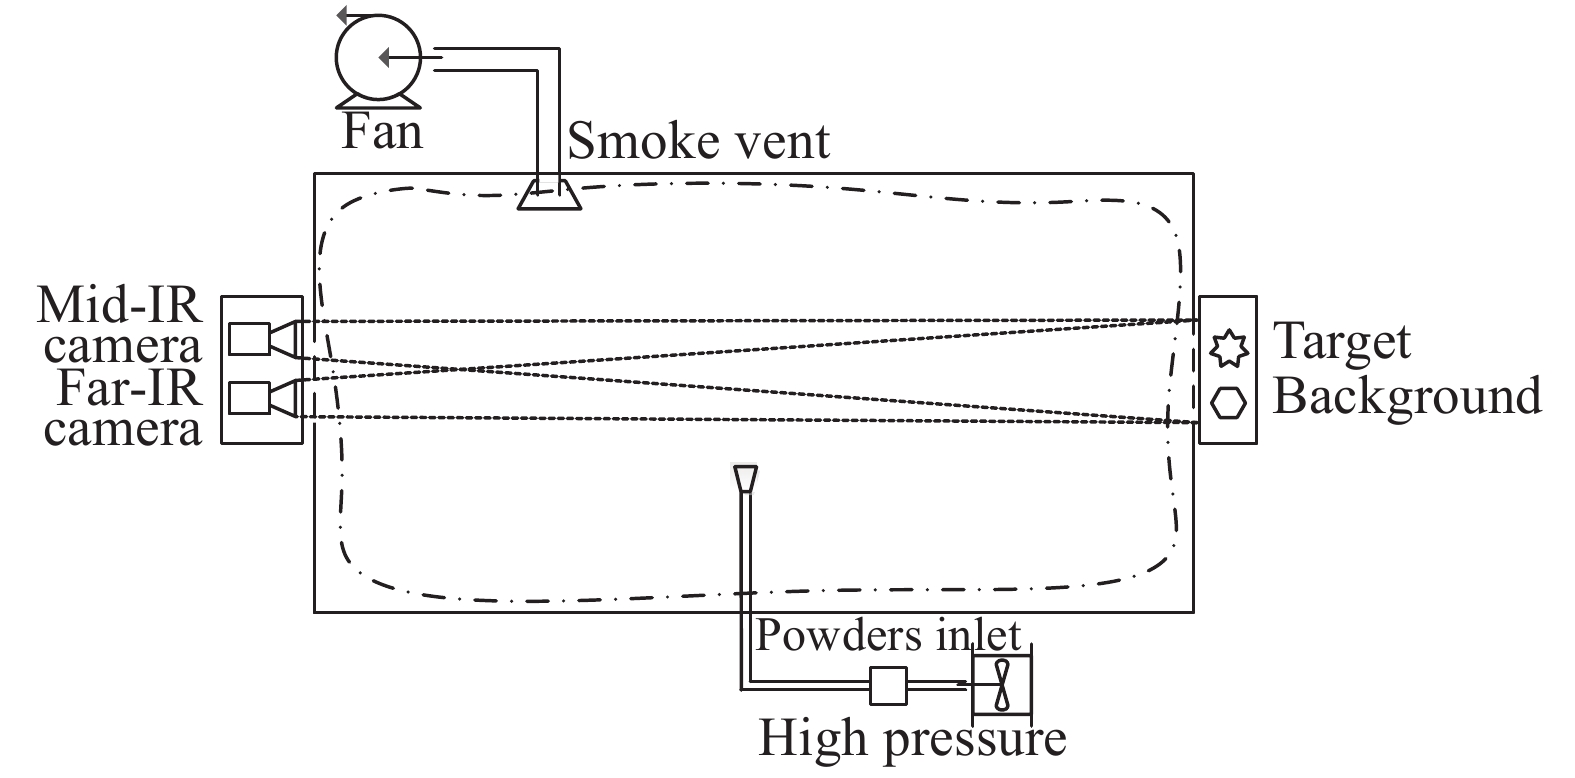 Layout diagram of experiment setup